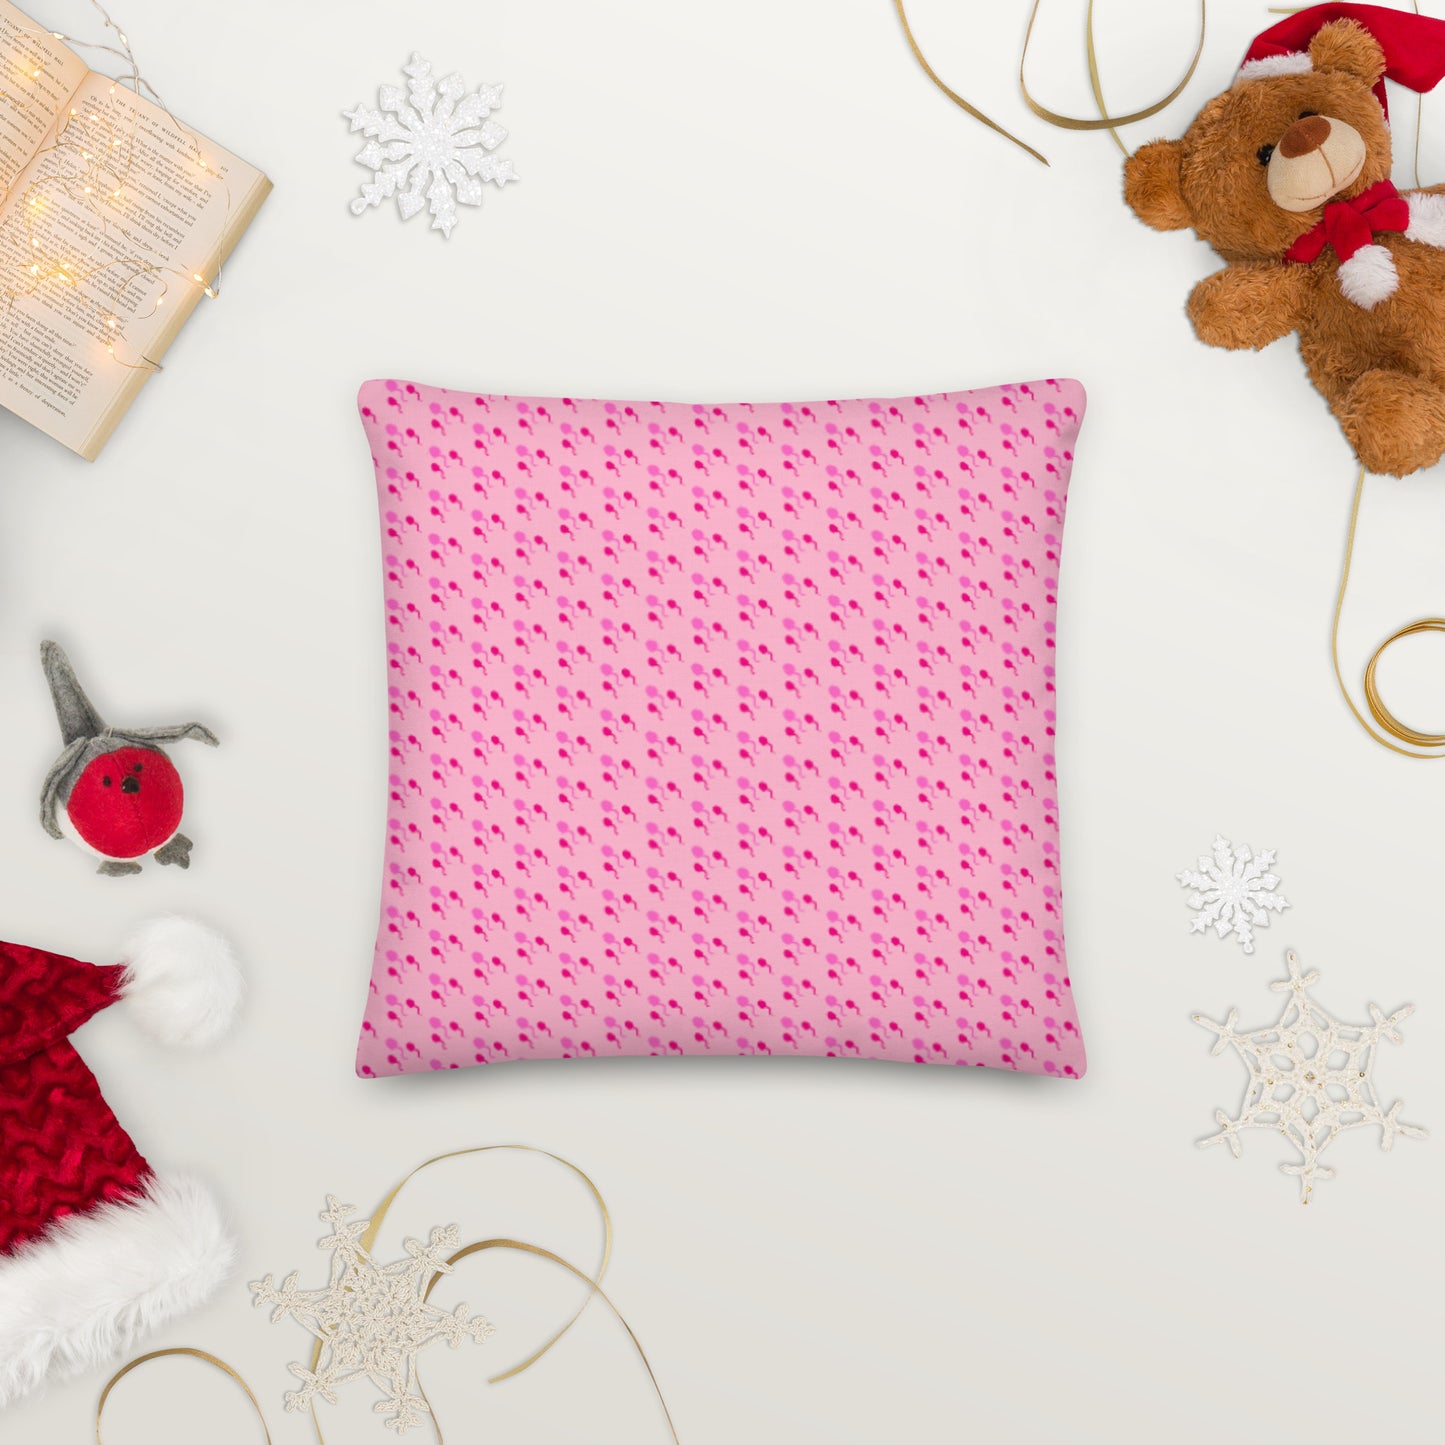 Premium Throw Pillow: Sperm (pink on pink)